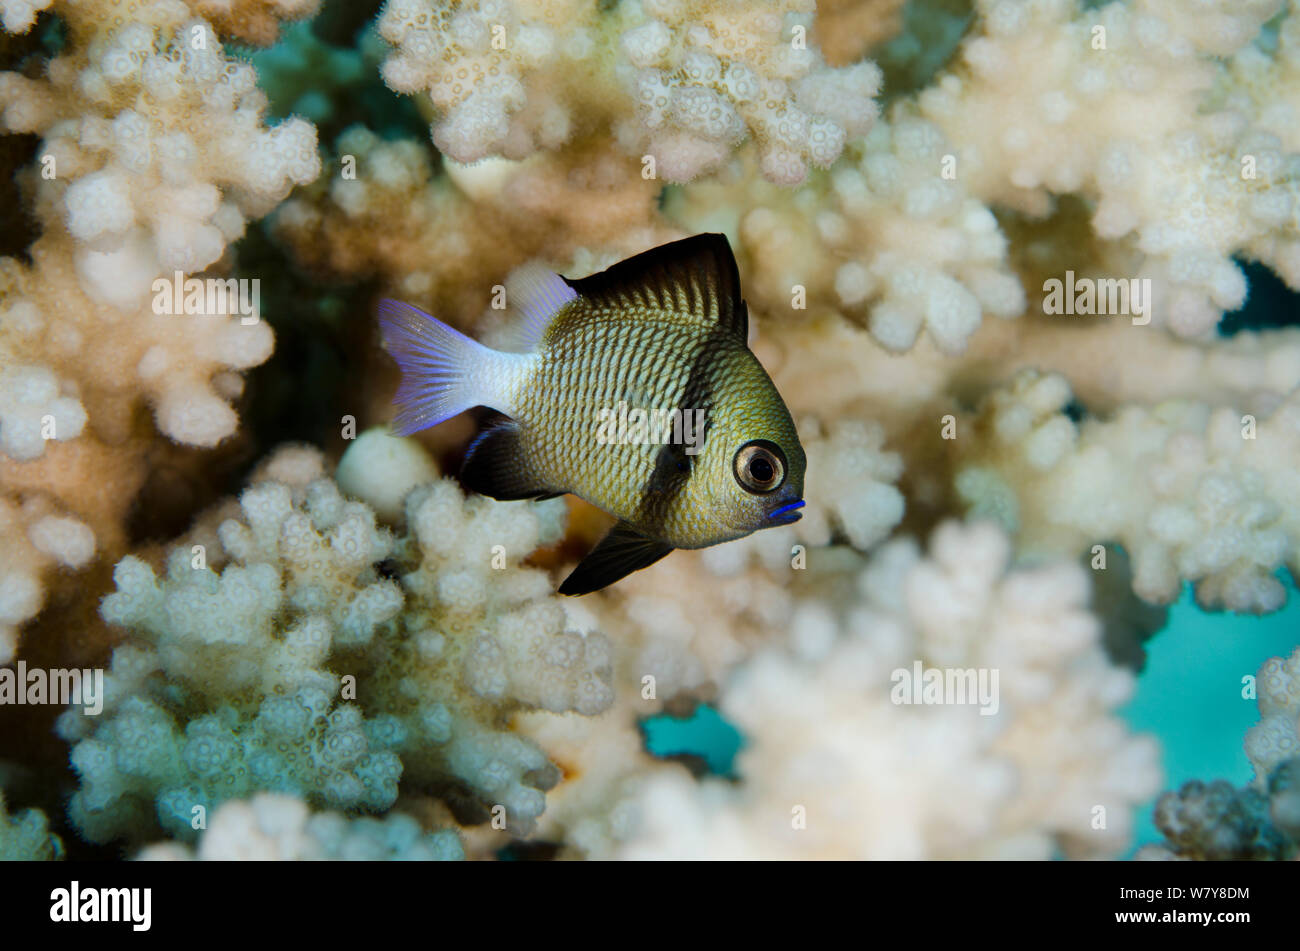 Aus vernetztem dascyllus (Dascyllus reticulatus) Rainbow Reef, Fiji, Südsee. Stockfoto